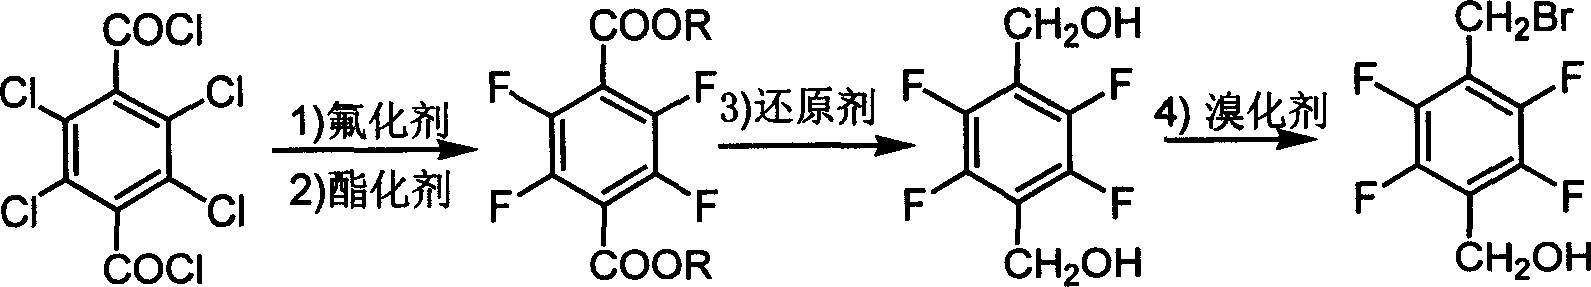 Process for preparing 2, 3, 5, 6-tetrafluoro-p-xylyl alcohol